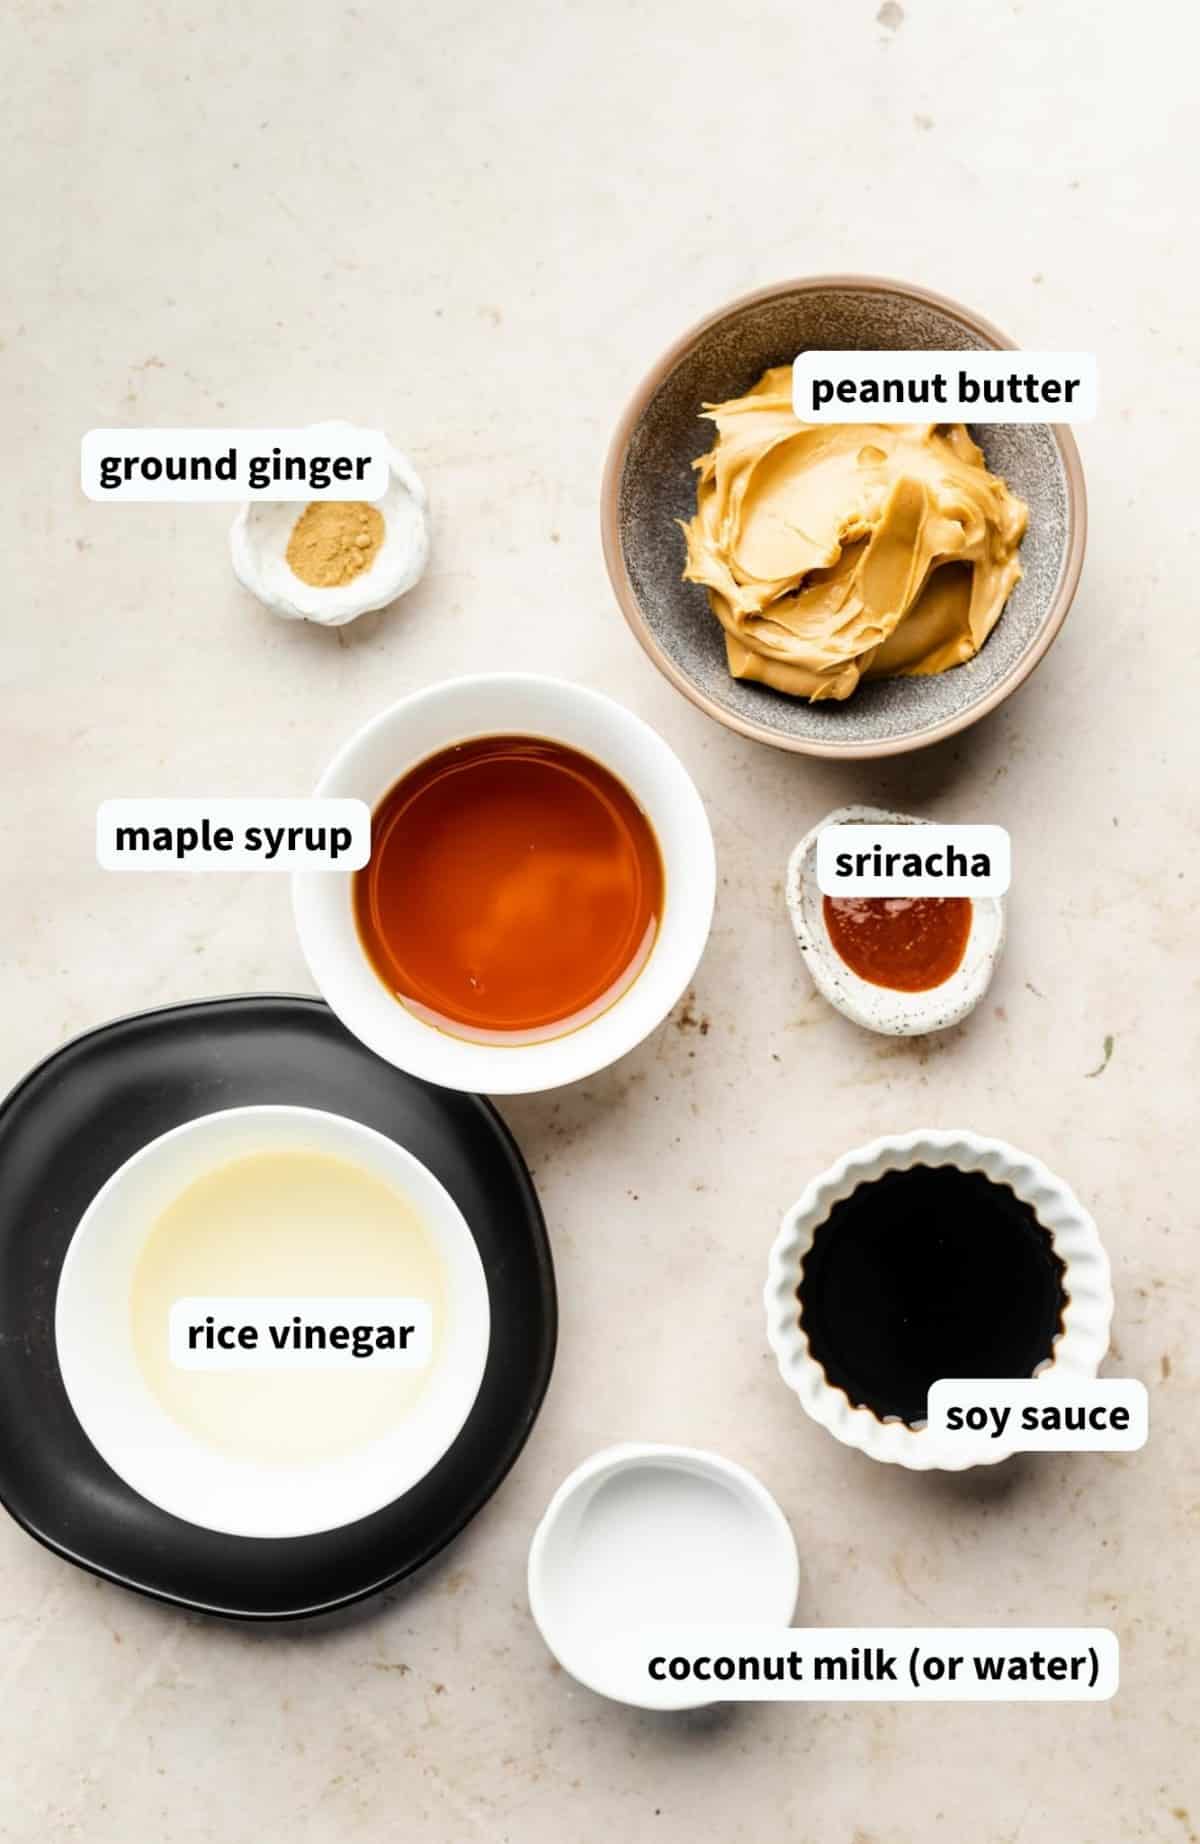 Vegan peanut sauce ingredients in separate white bowls.